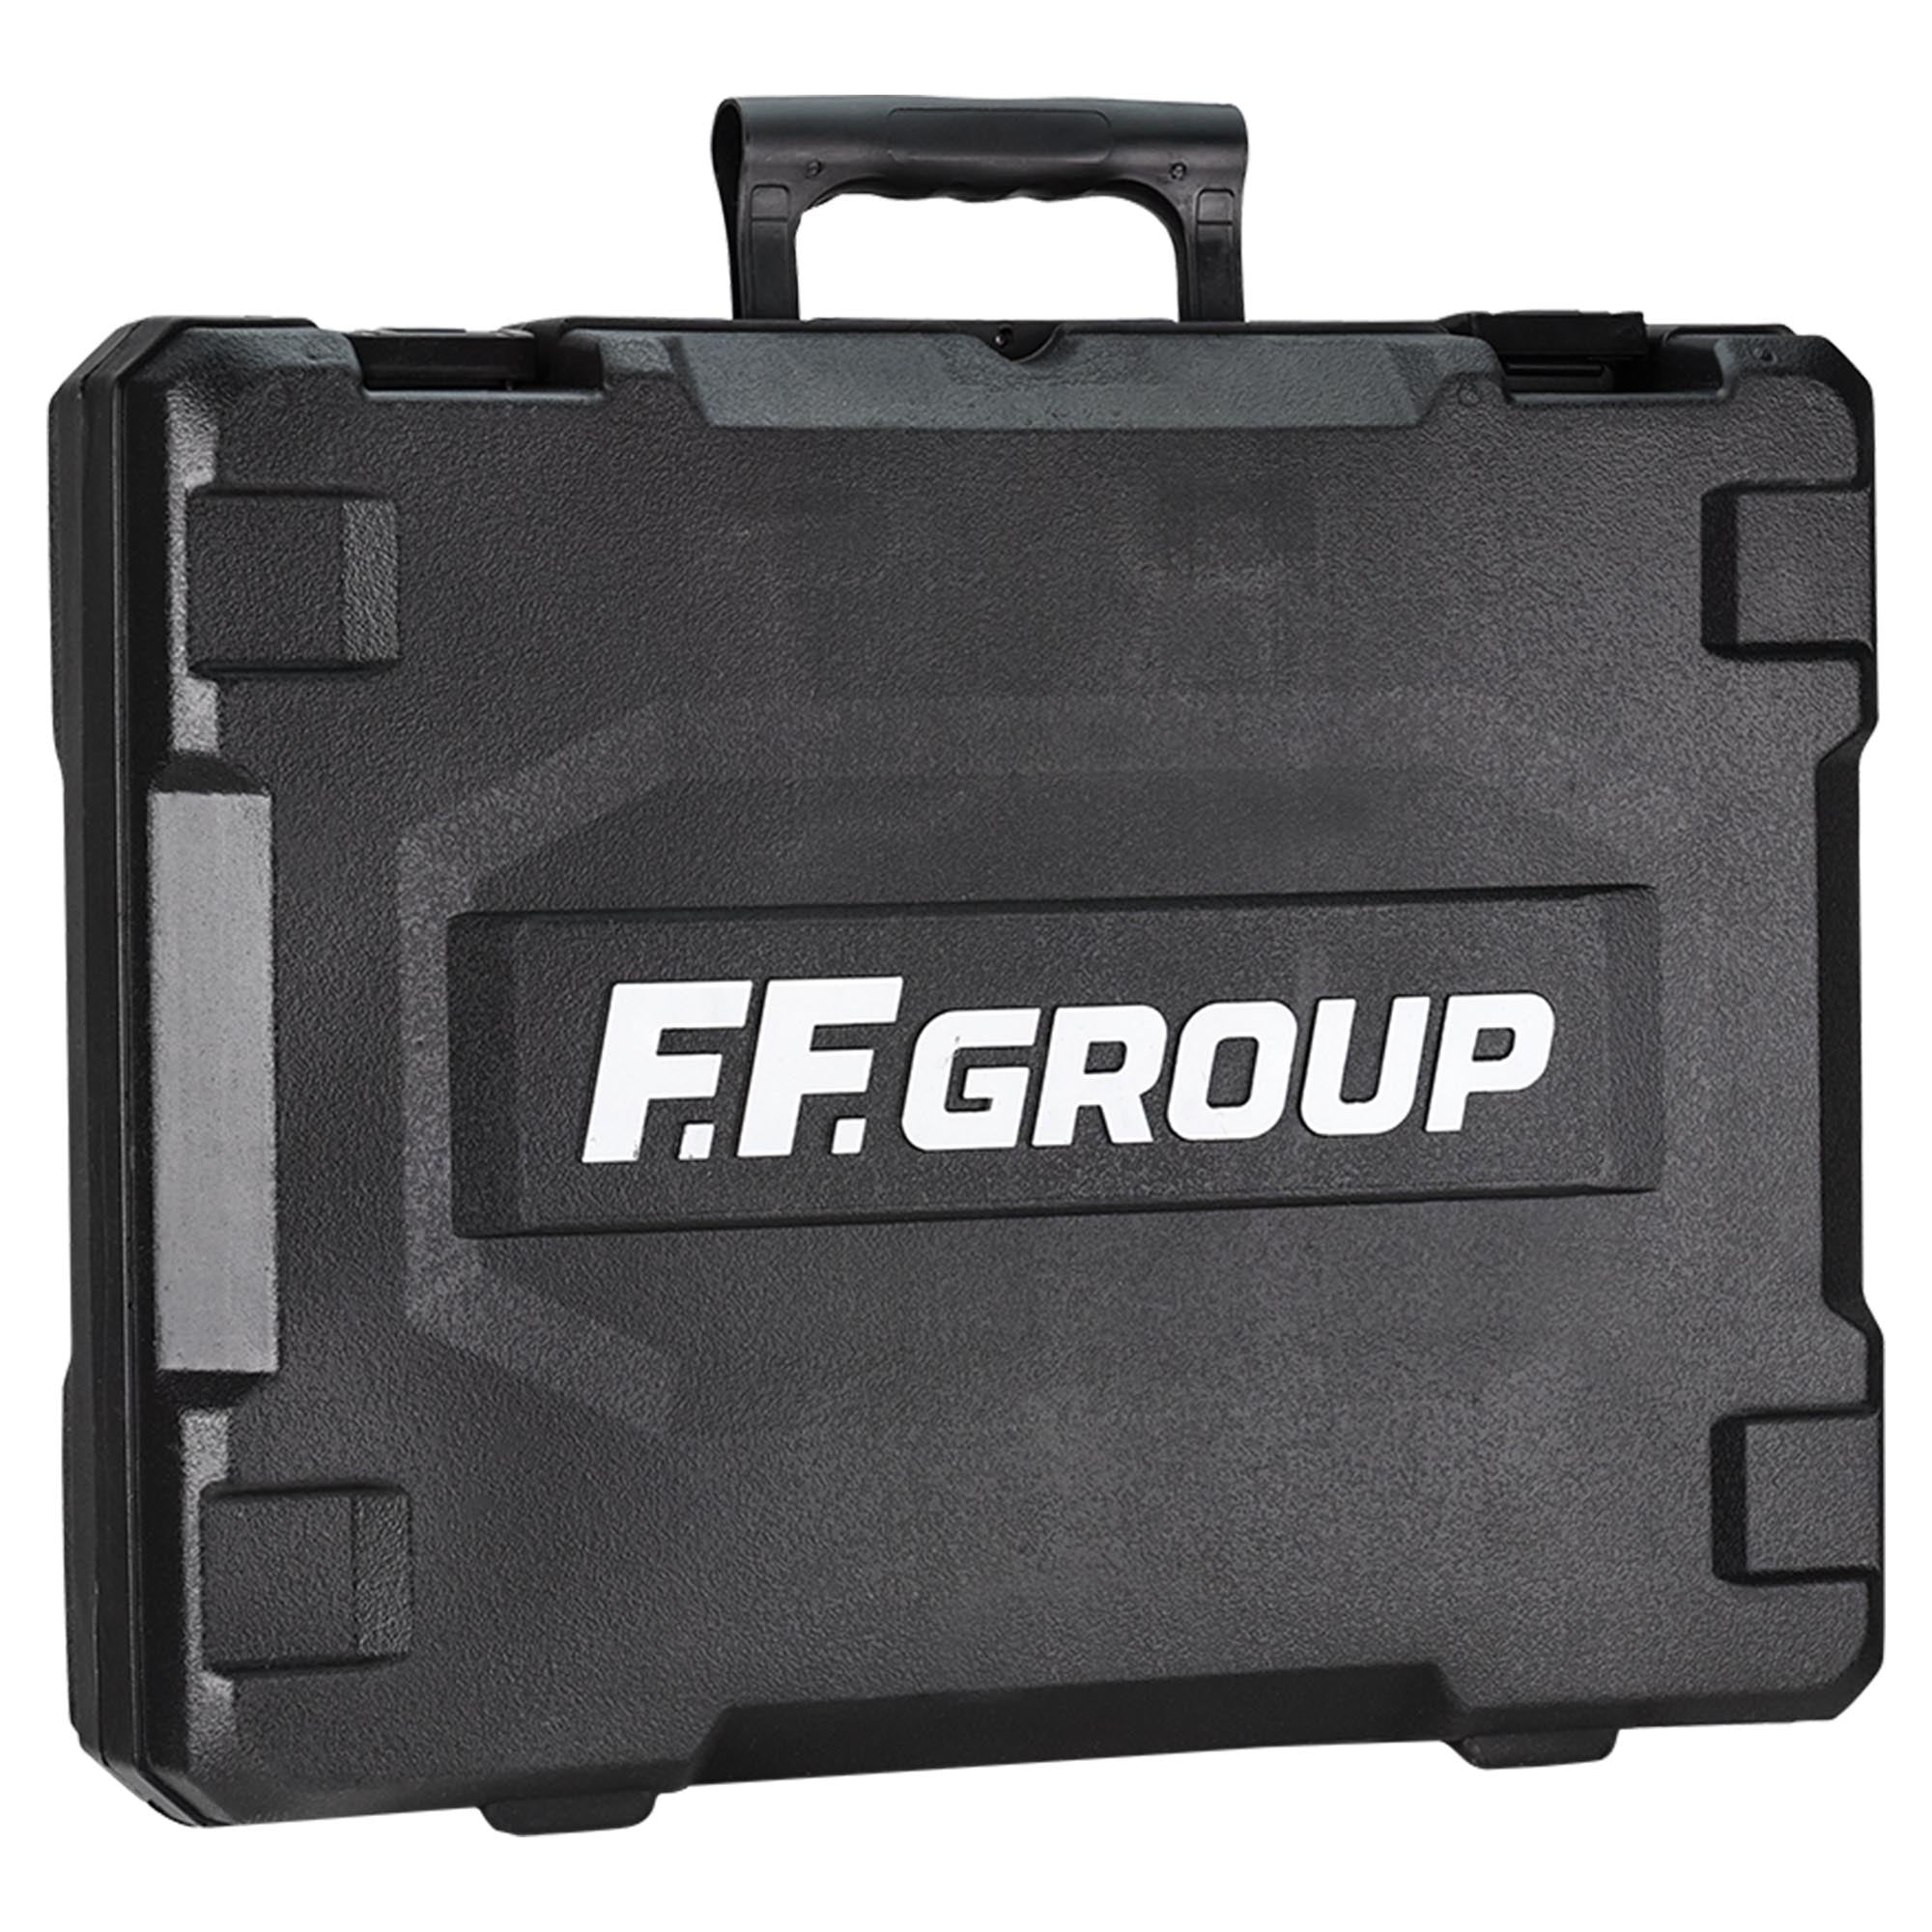 Tassellatore FFgroup RH 2-26 FC 850W